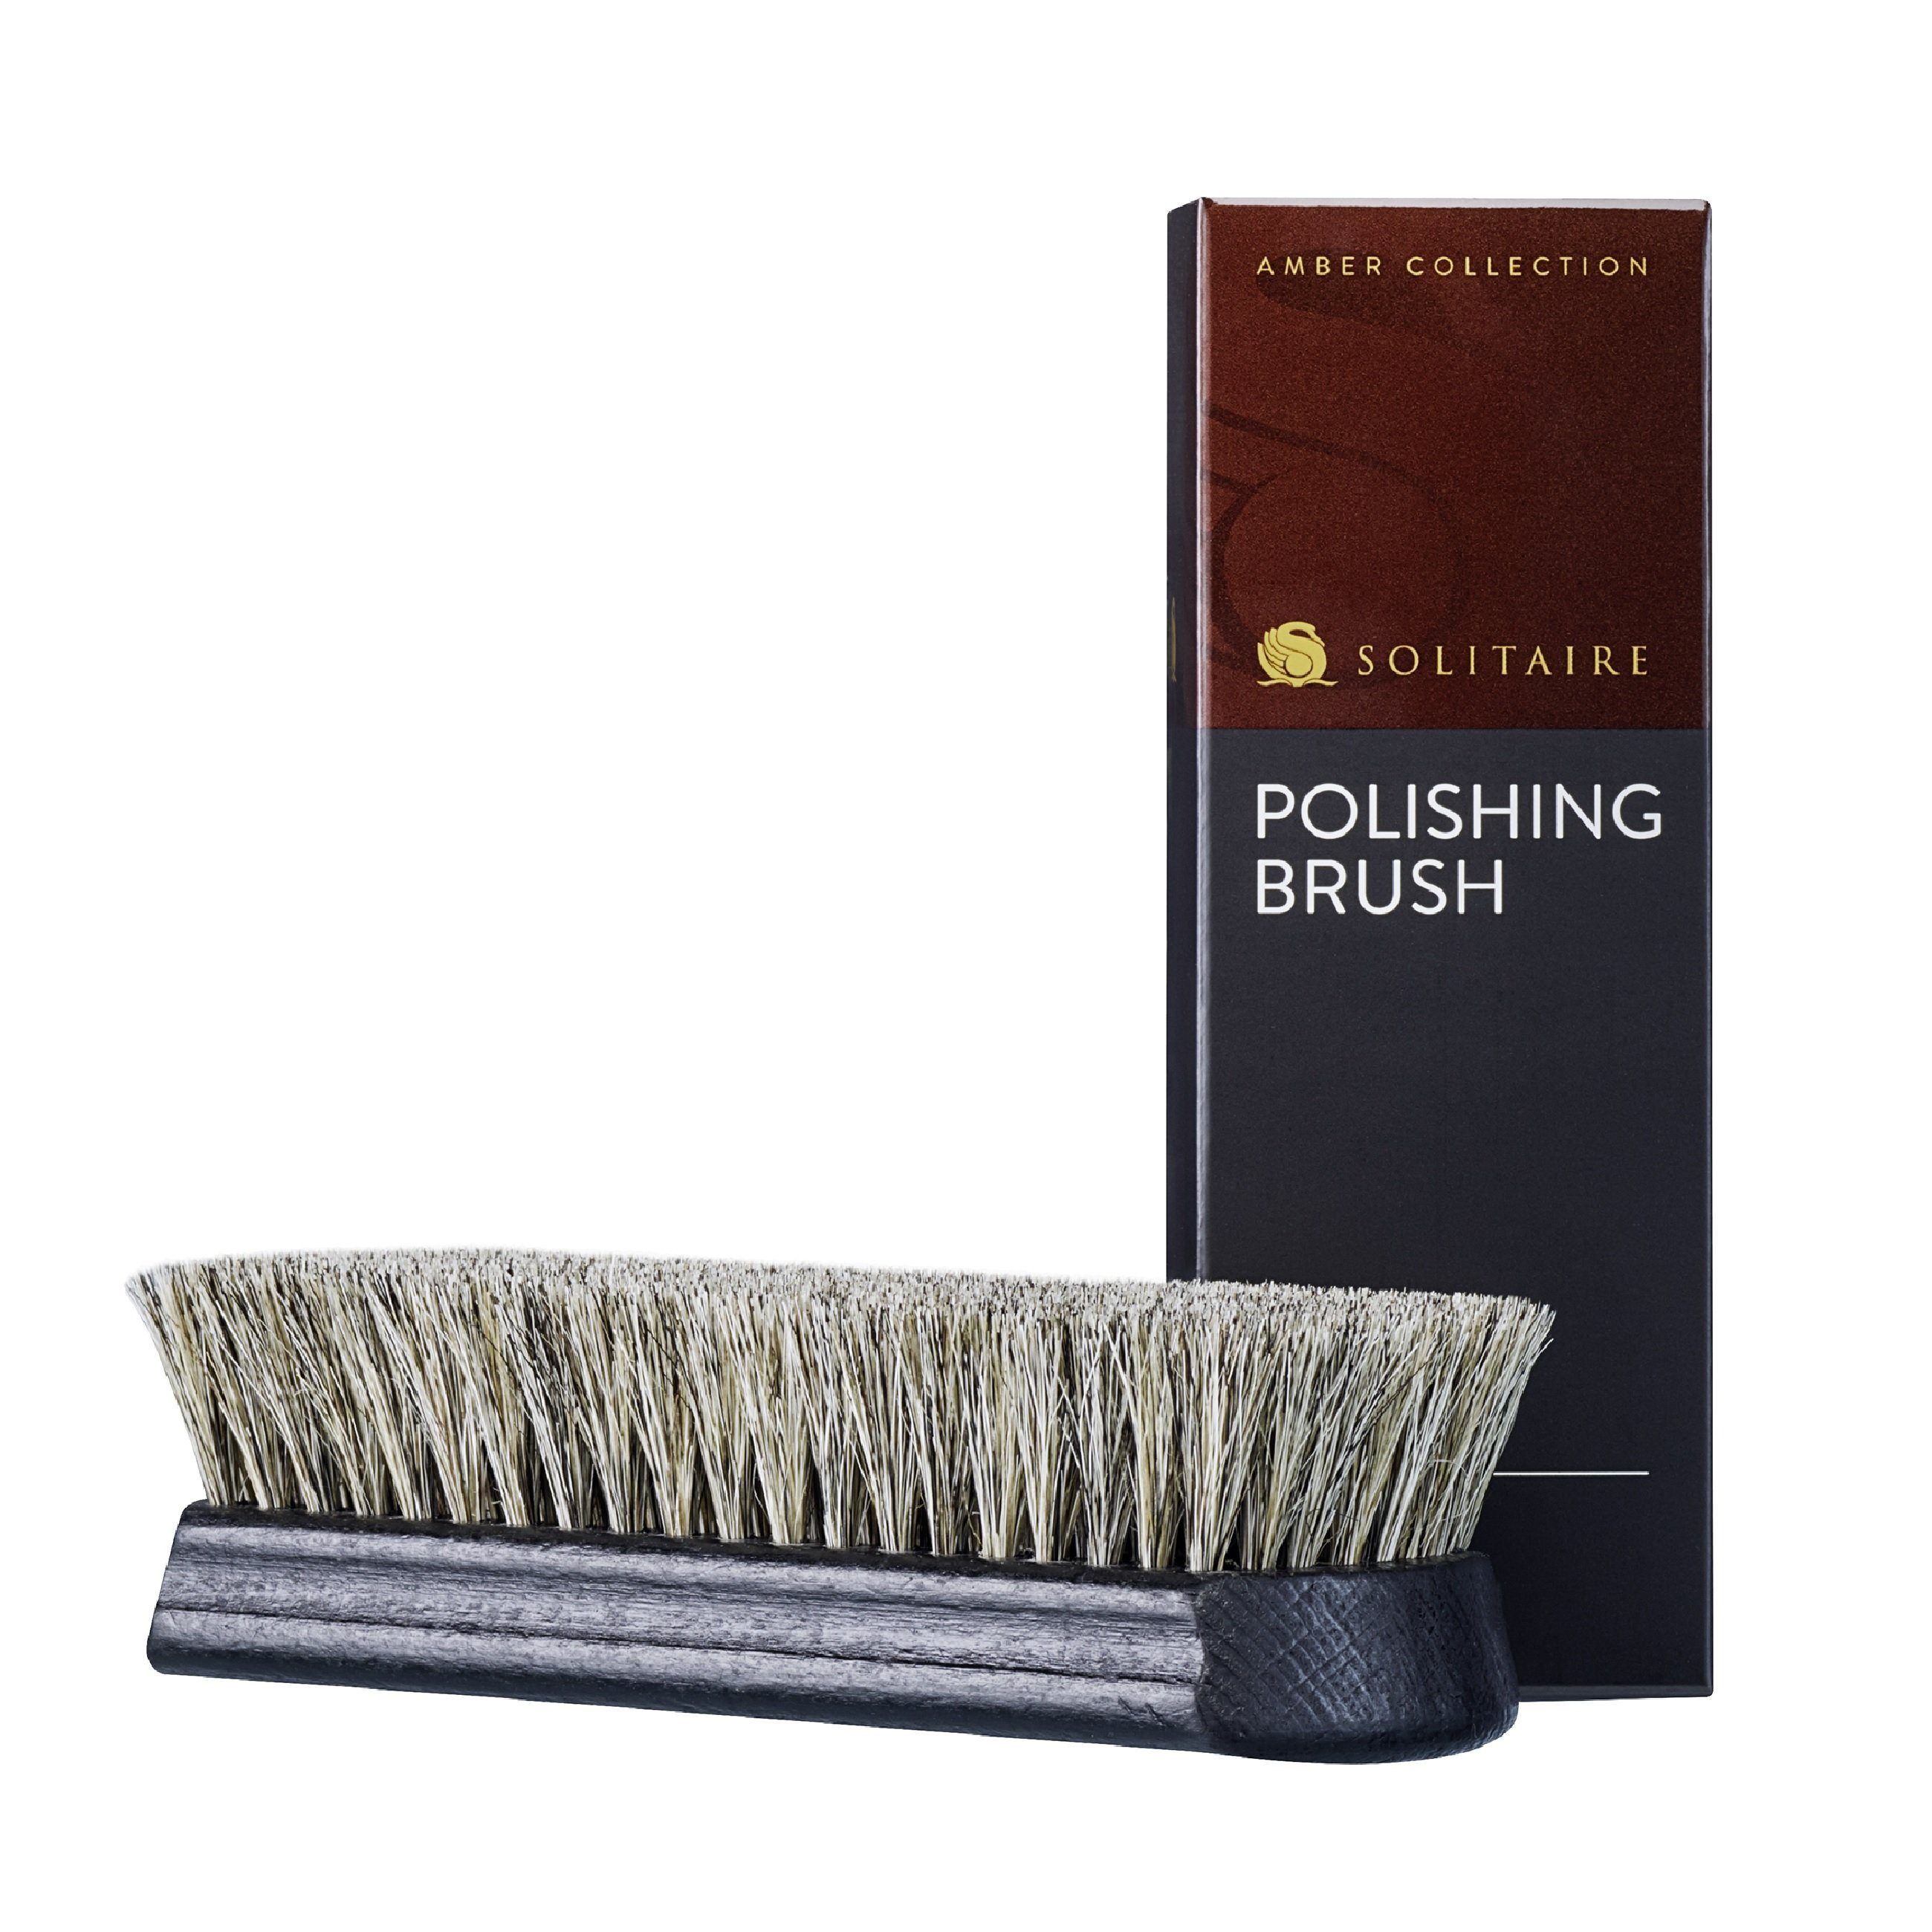 - Collection Polishing Brush Amber Premium Schuhputzbürste Solitaire